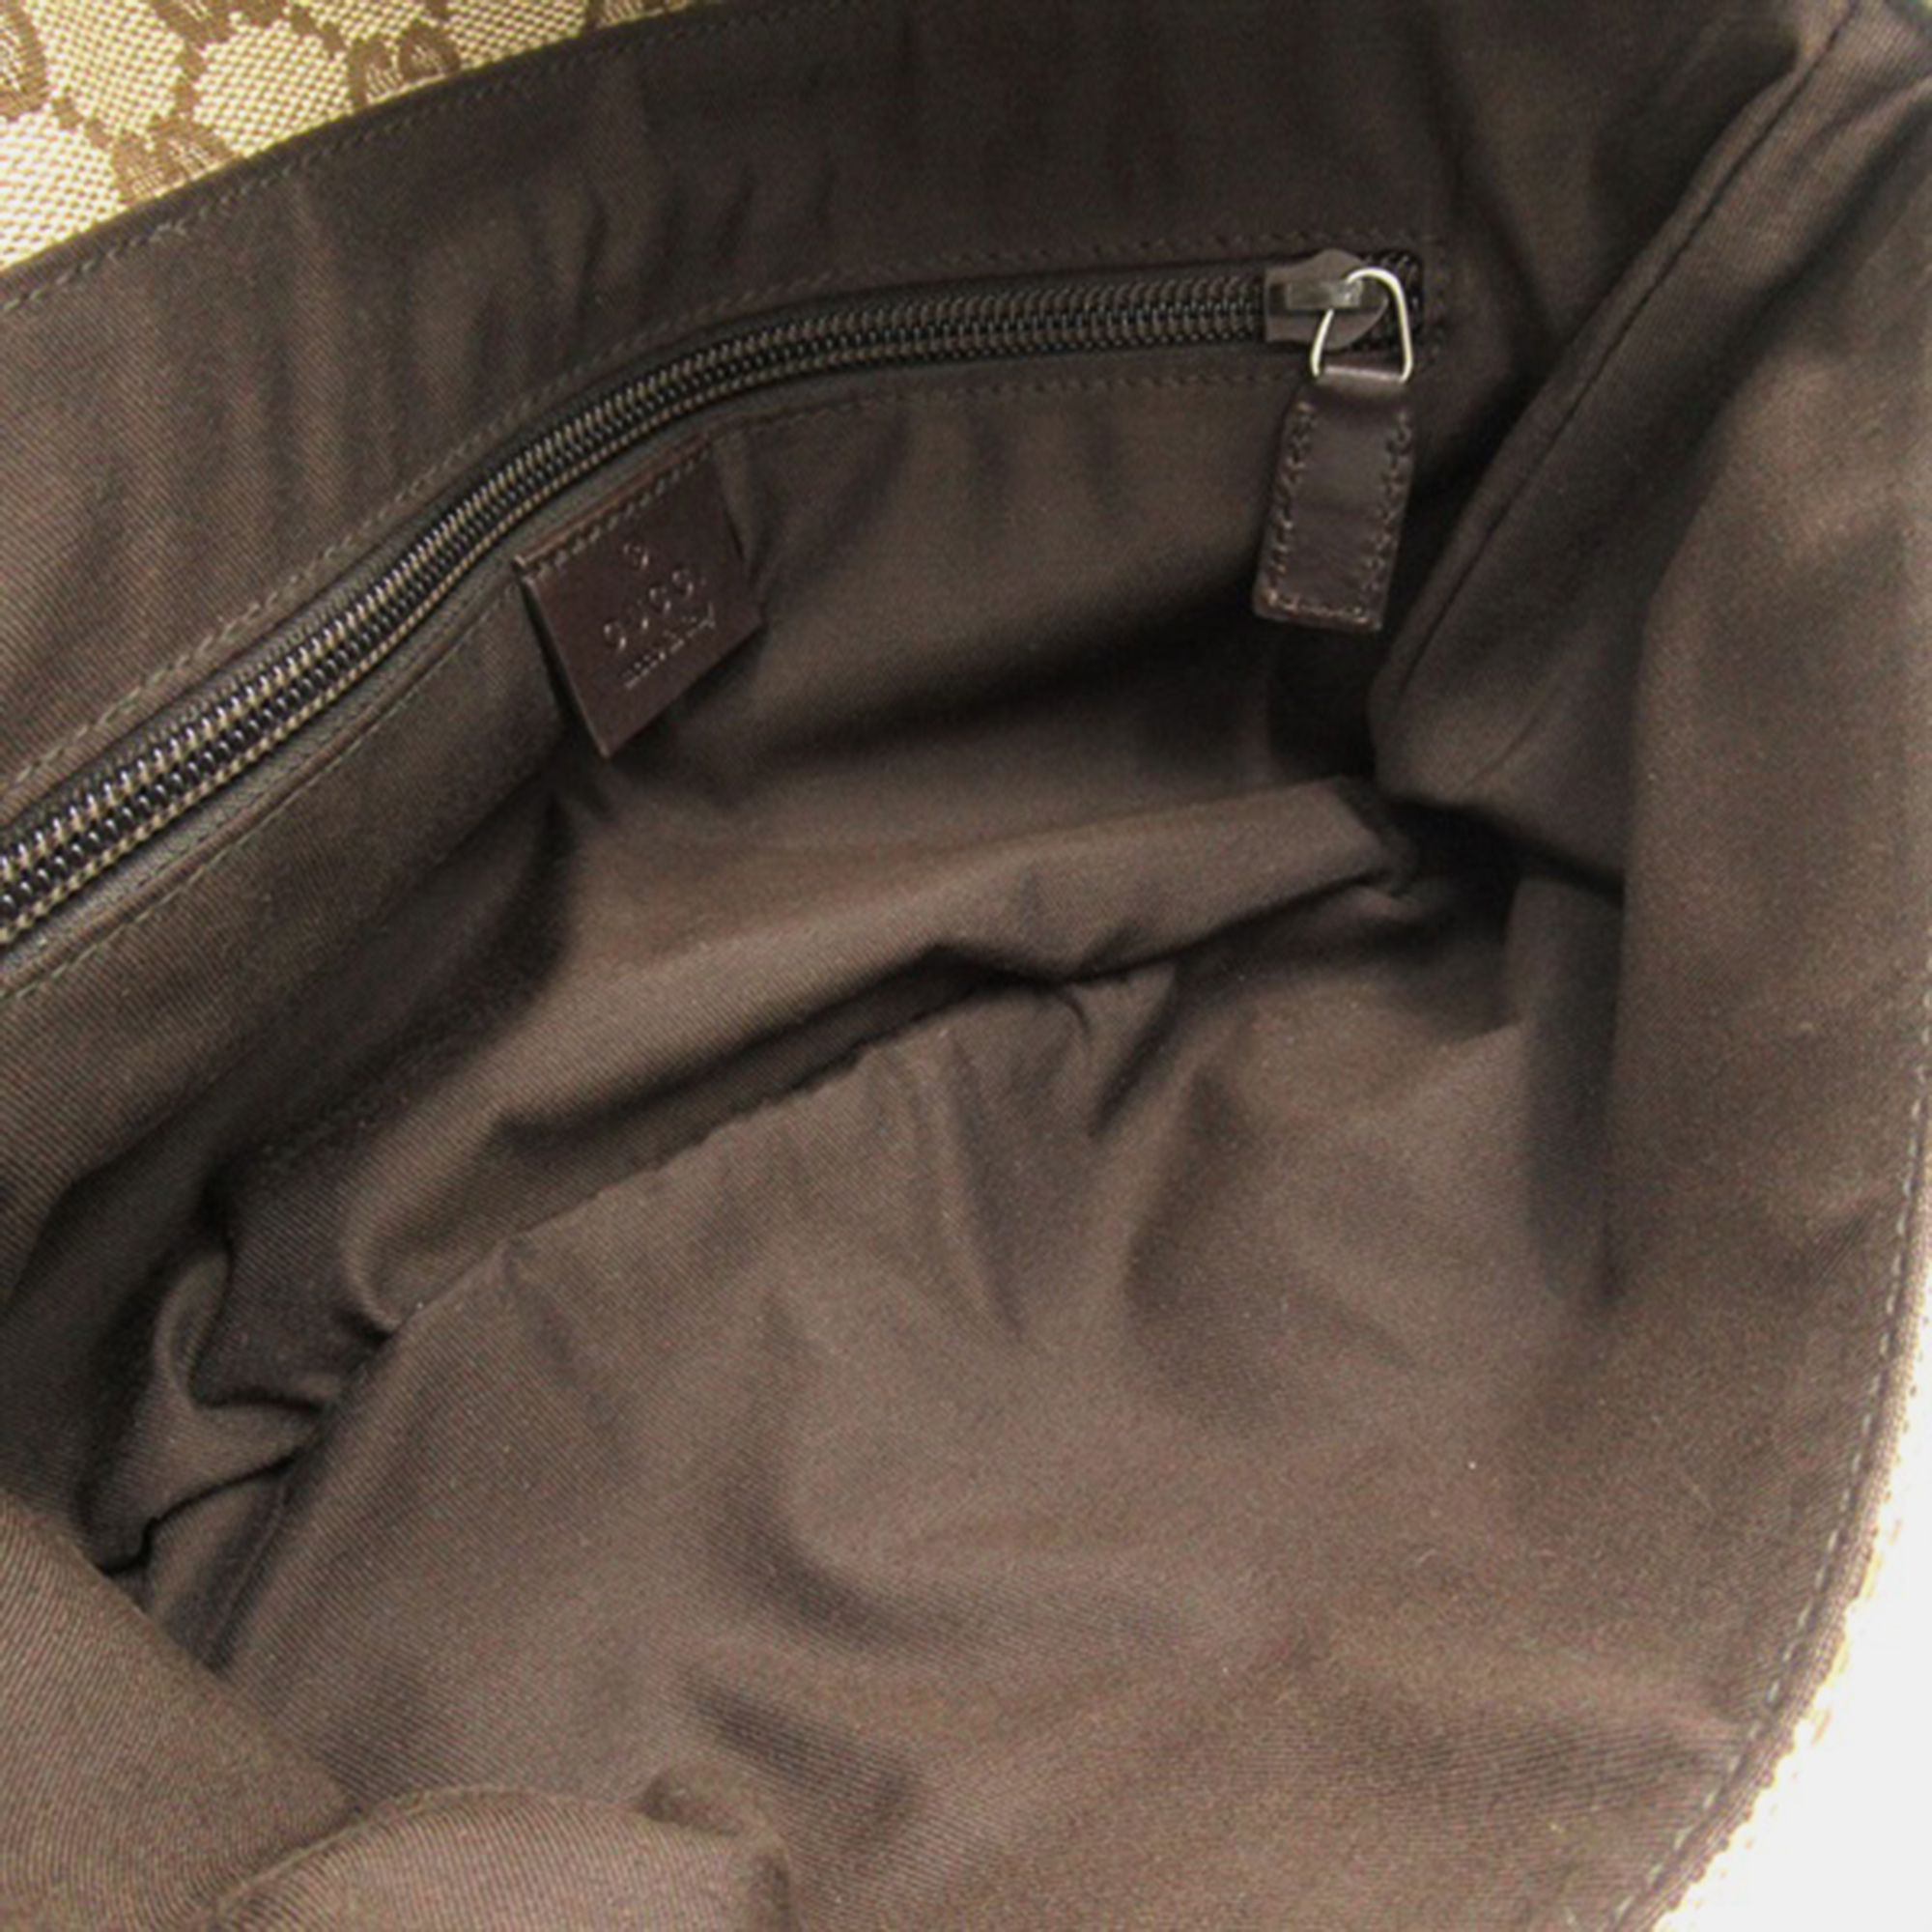 Gucci Beige Leather-Trimmed GG Canvas Waist Bag